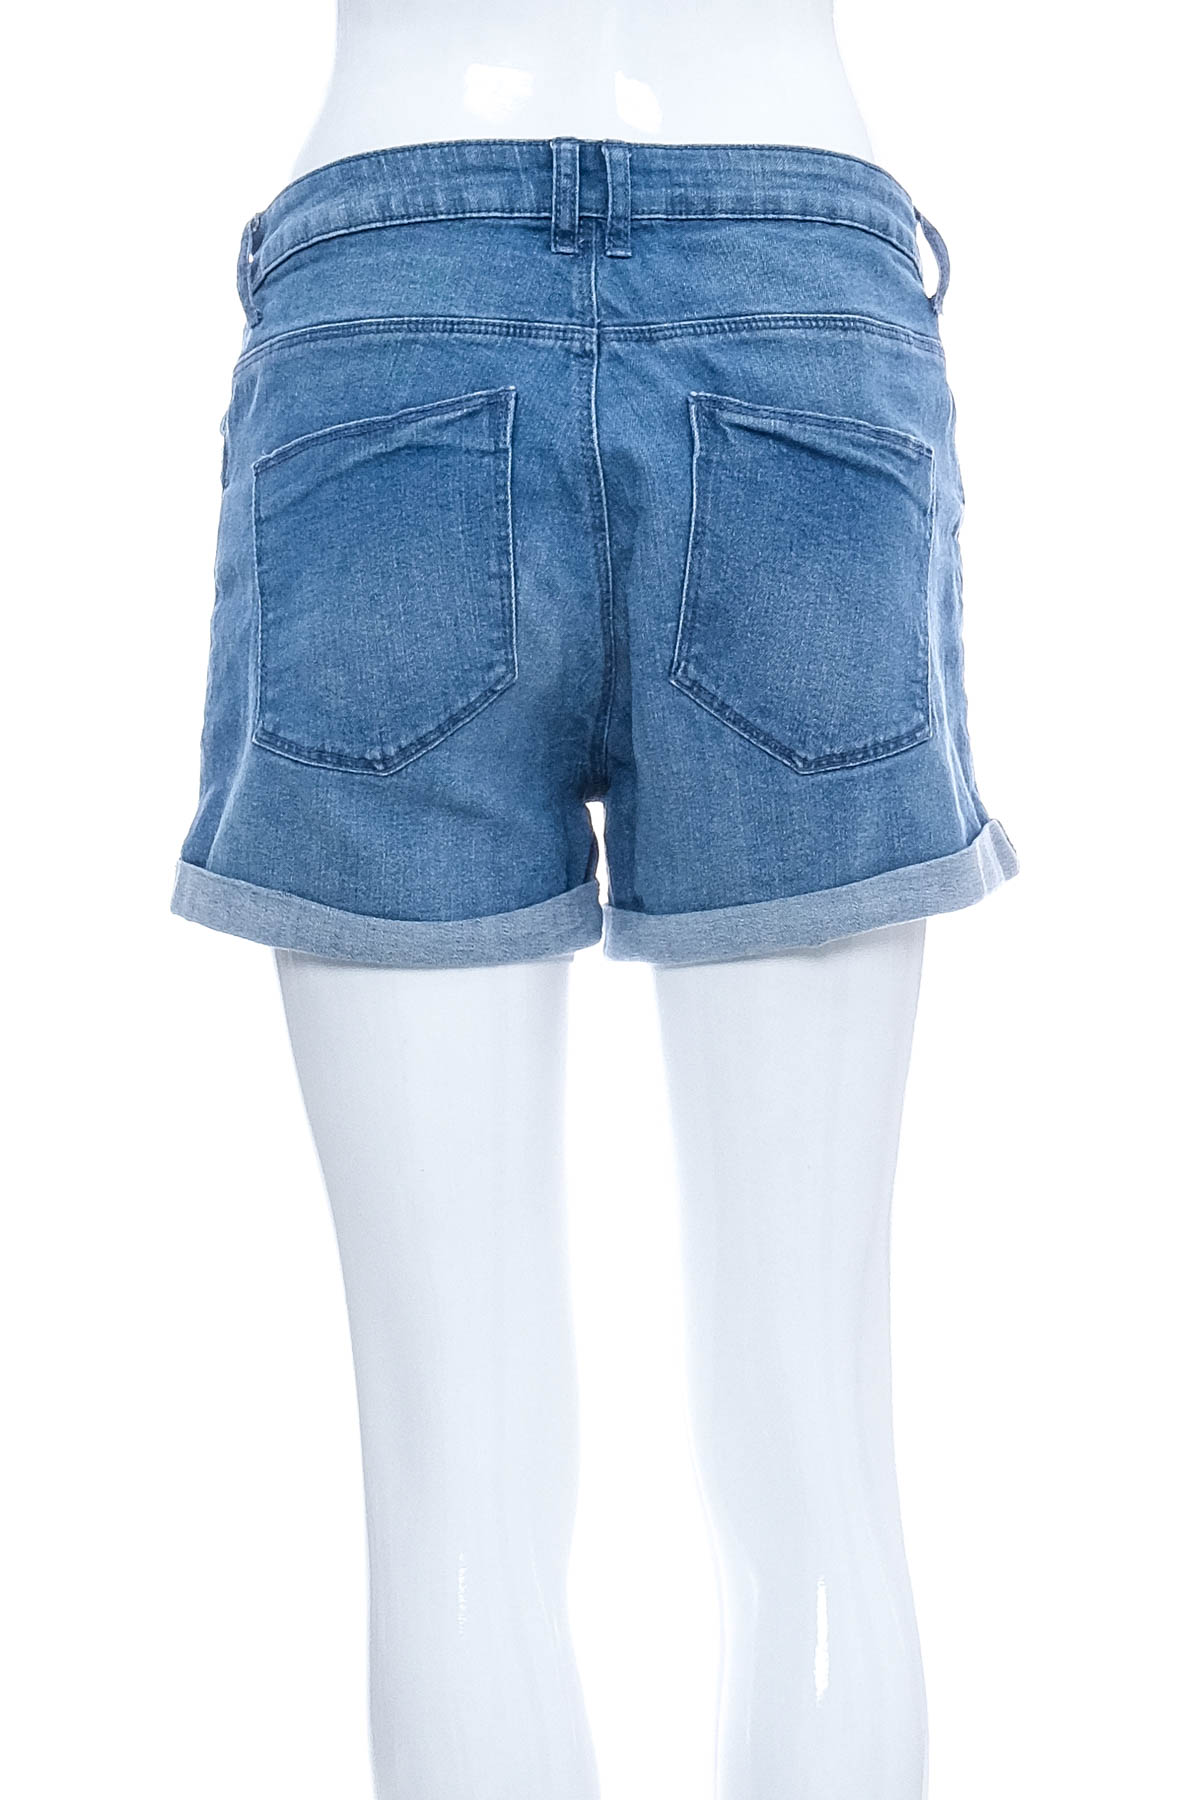 Female shorts - Esmara - 1